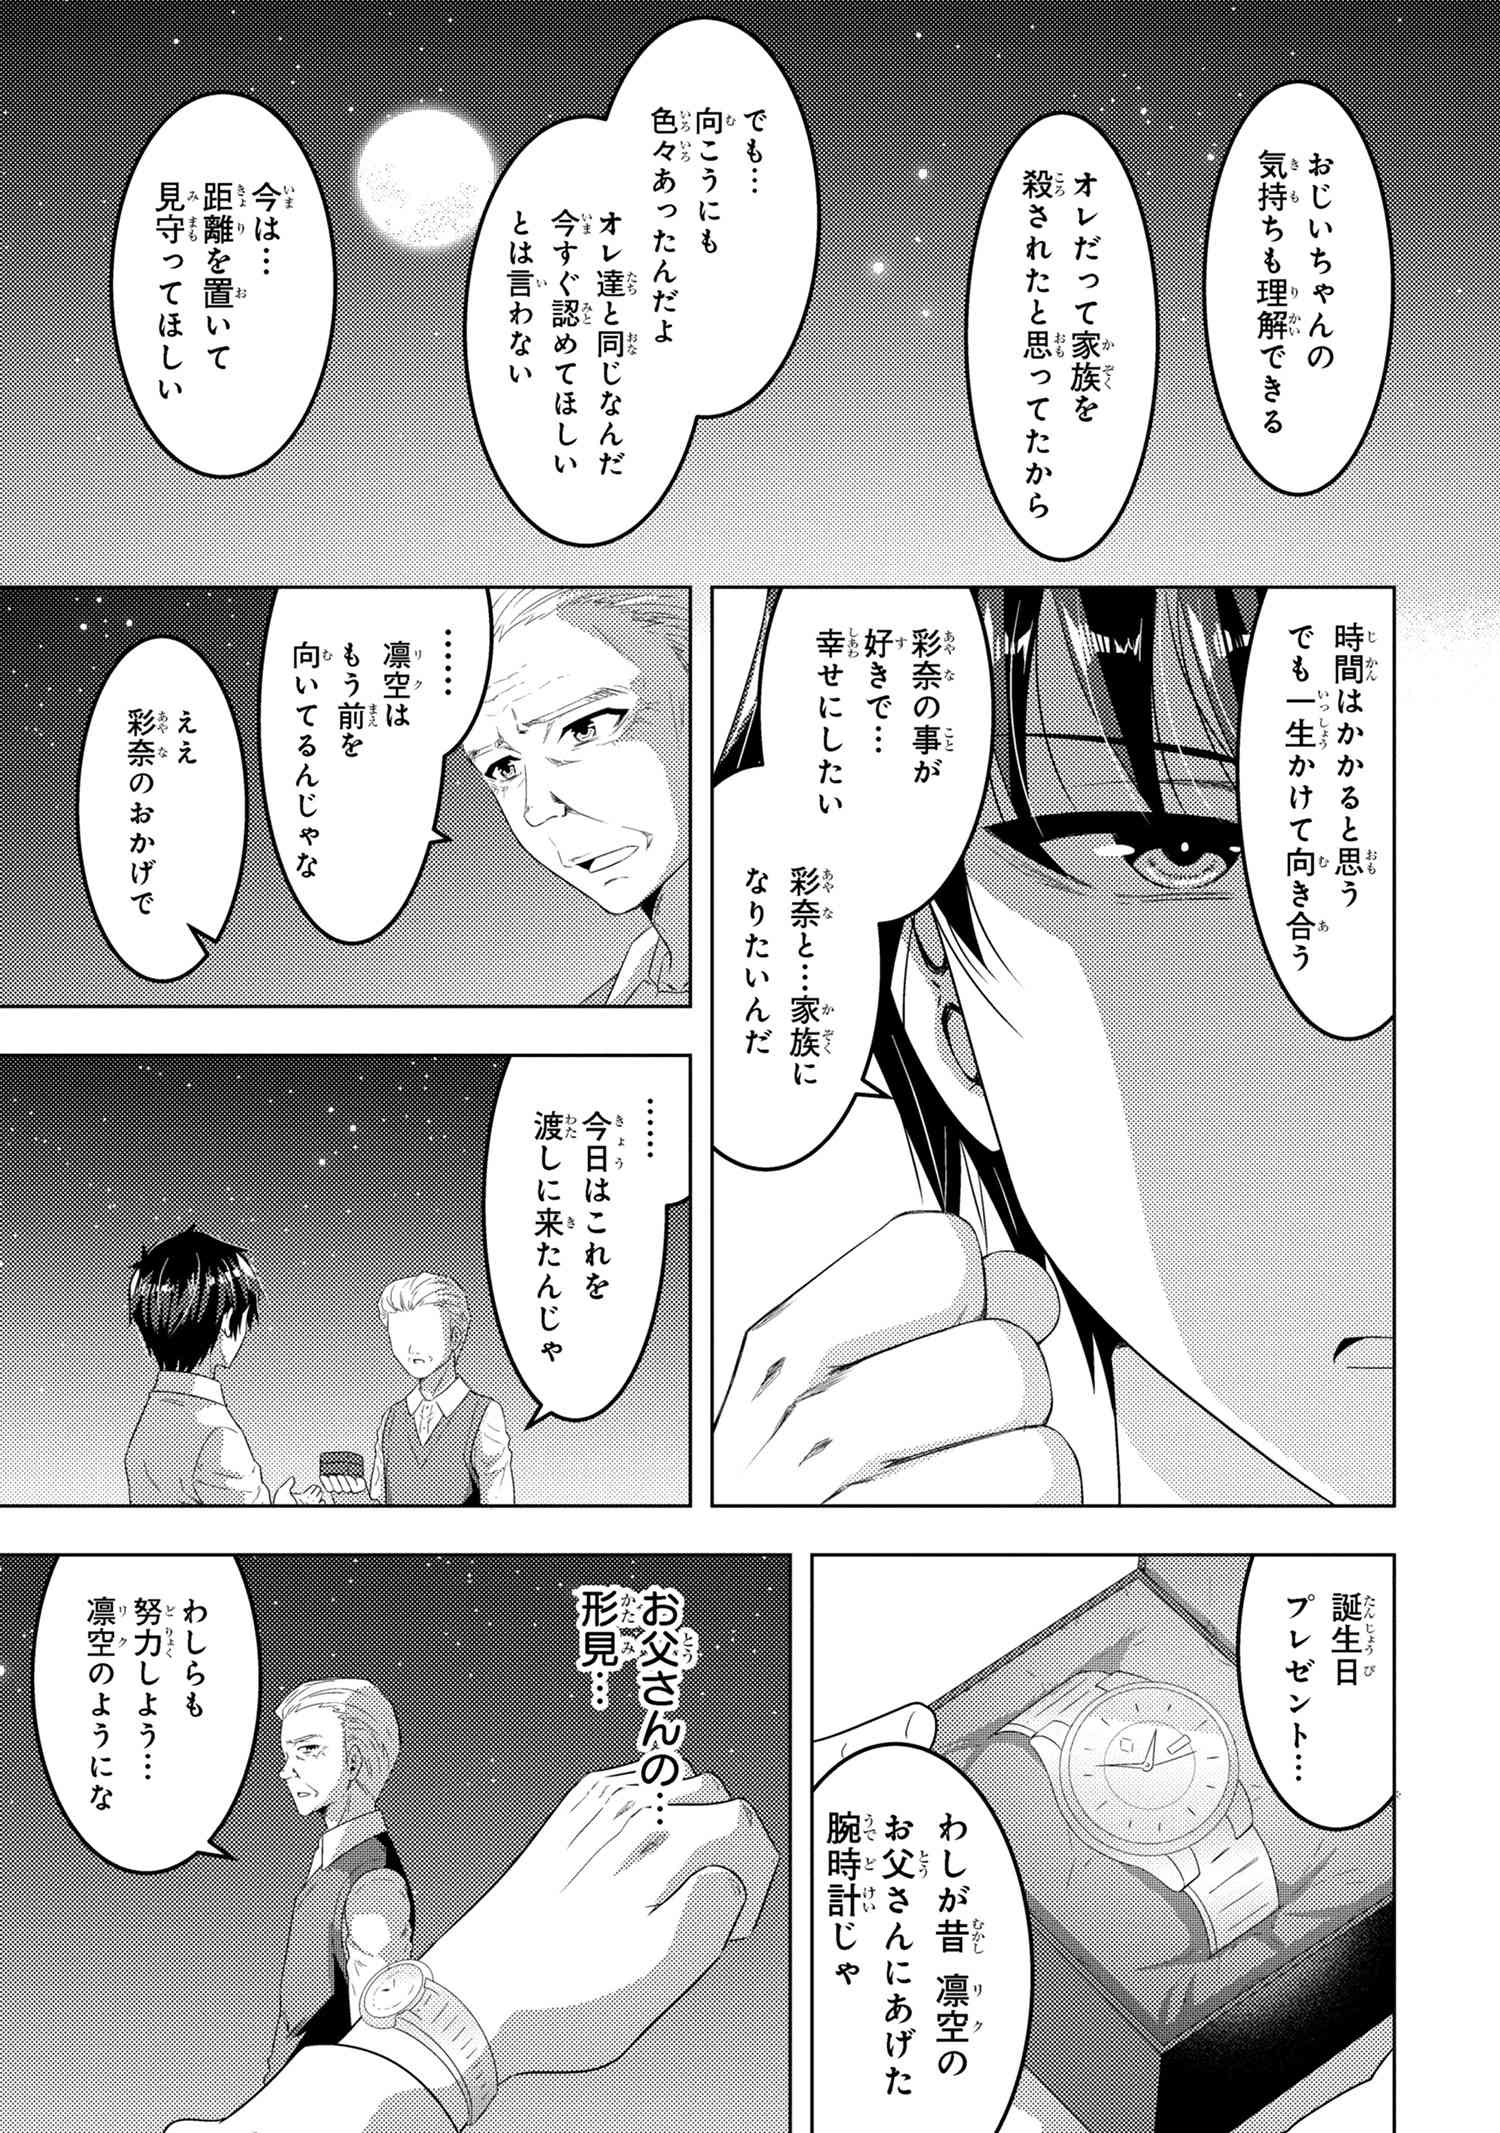 Konbini Goutou kara Tasuketa Jimi Tenin ga, Onaji Class no Ubu de Kawaii Gal datta - Chapter 14.2 - Page 6